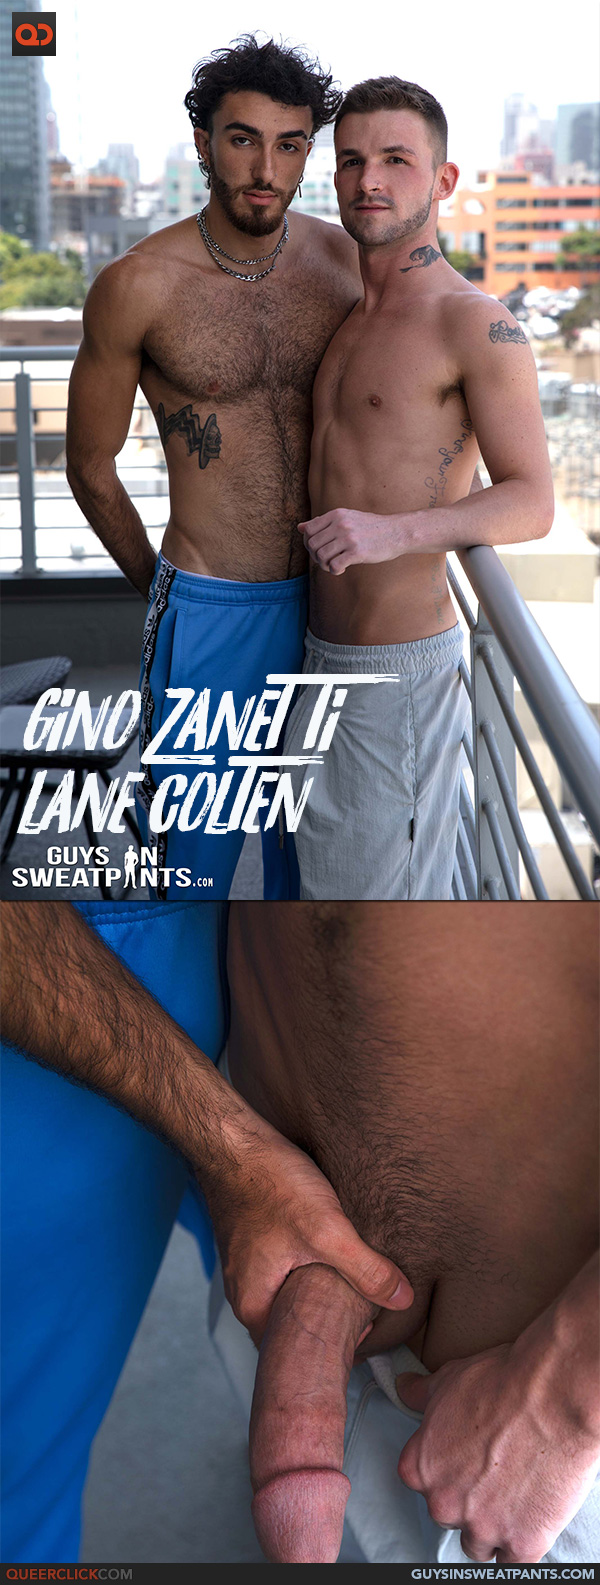 Guys in Sweatpants: Gino Zanetti and Lane Colten - BLACK FRIDAY SAVINGS!